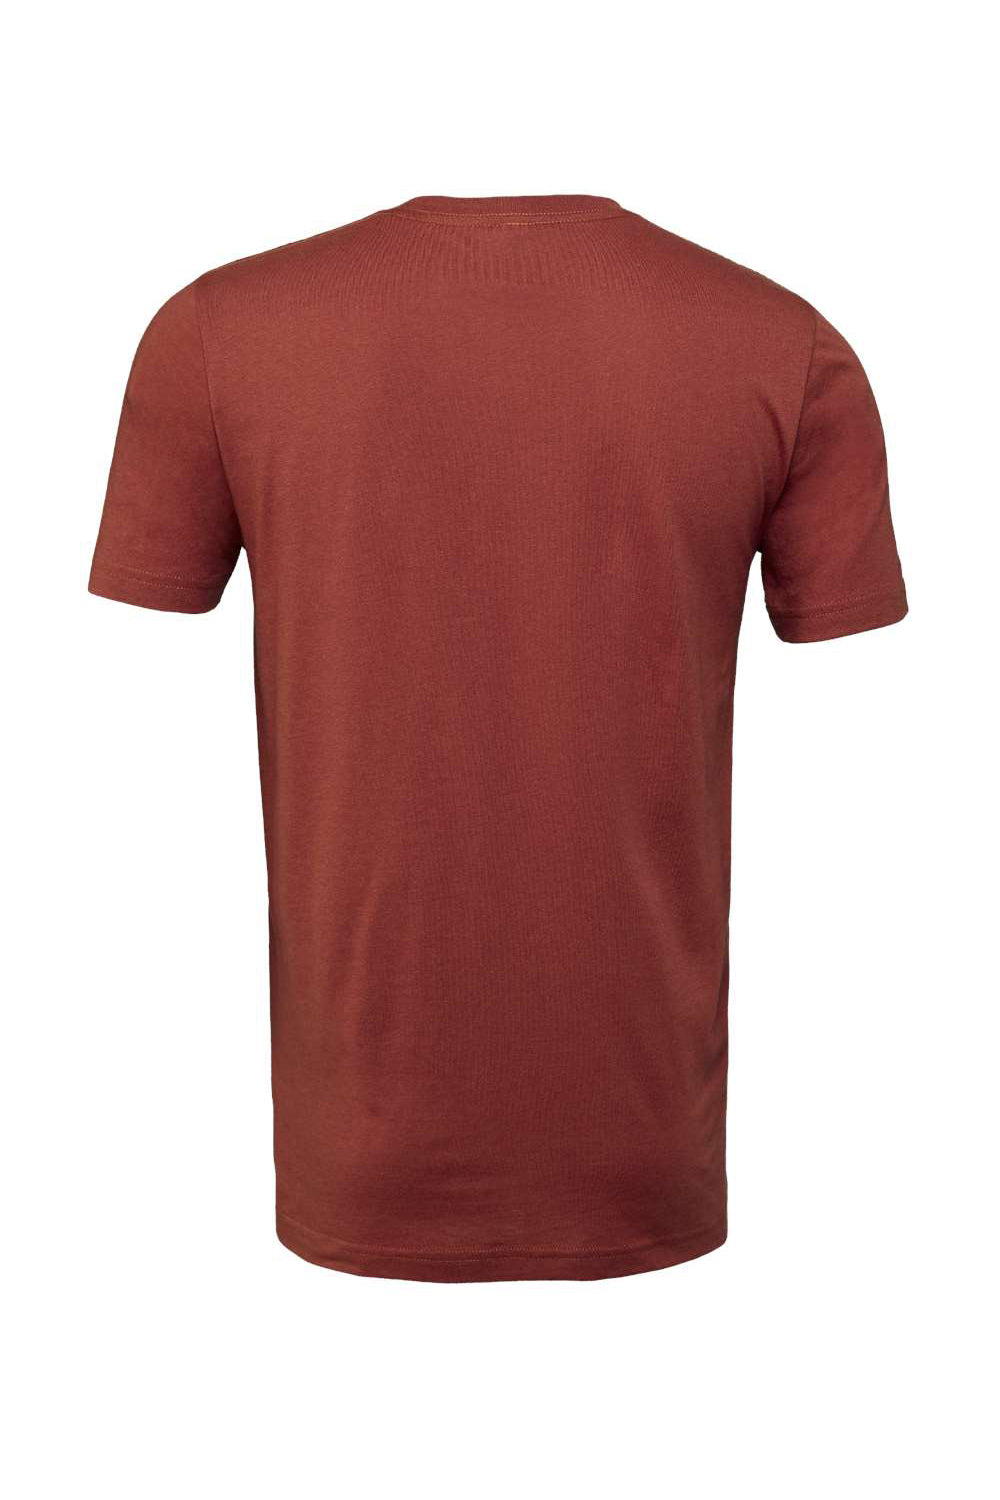 Bella + Canvas BC3001/3001C Mens Jersey Short Sleeve Crewneck T-Shirt Rust Red Flat Back